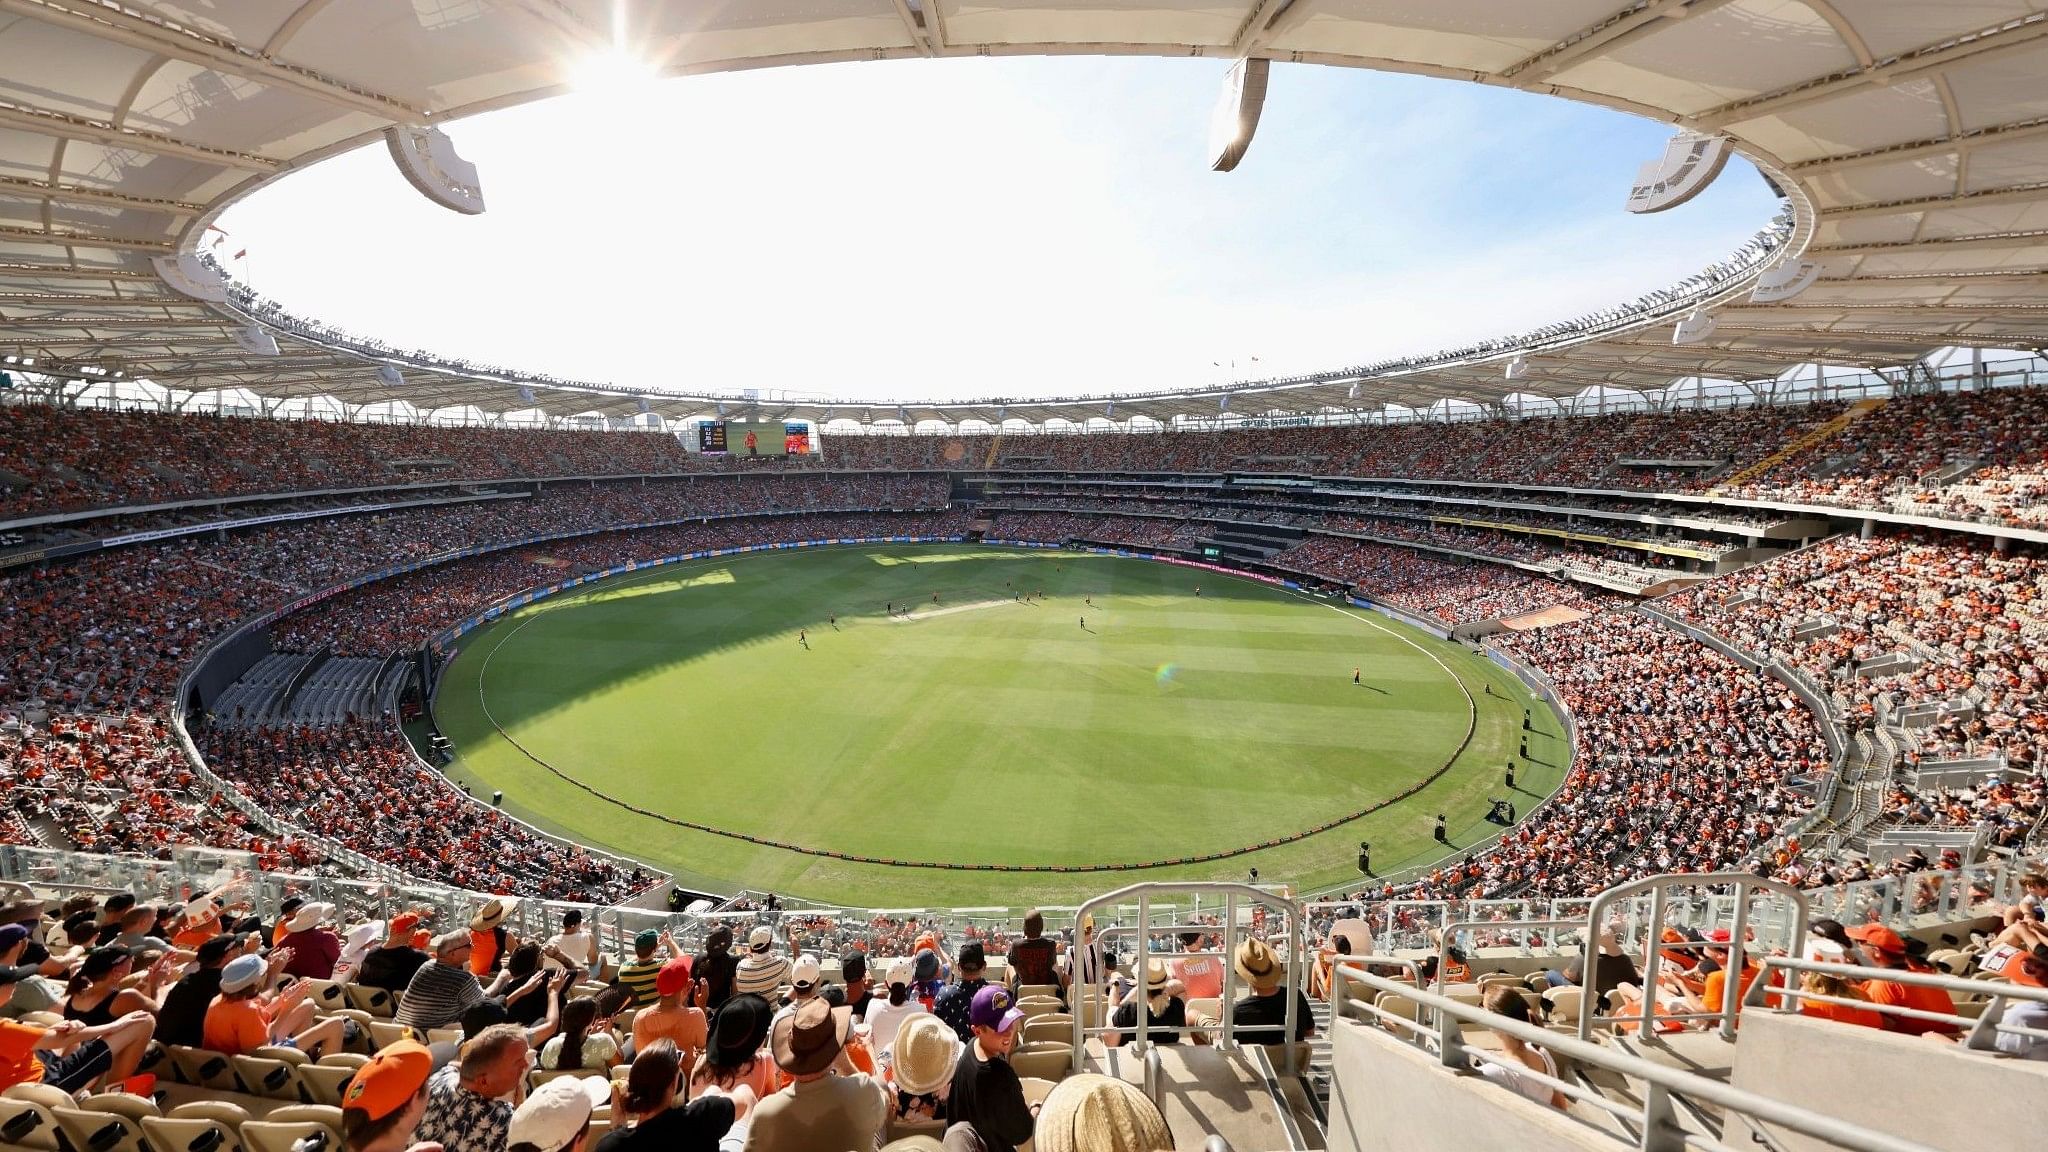 <div class="paragraphs"><p>Representative image of Australian cricket stadium.&nbsp;</p></div>